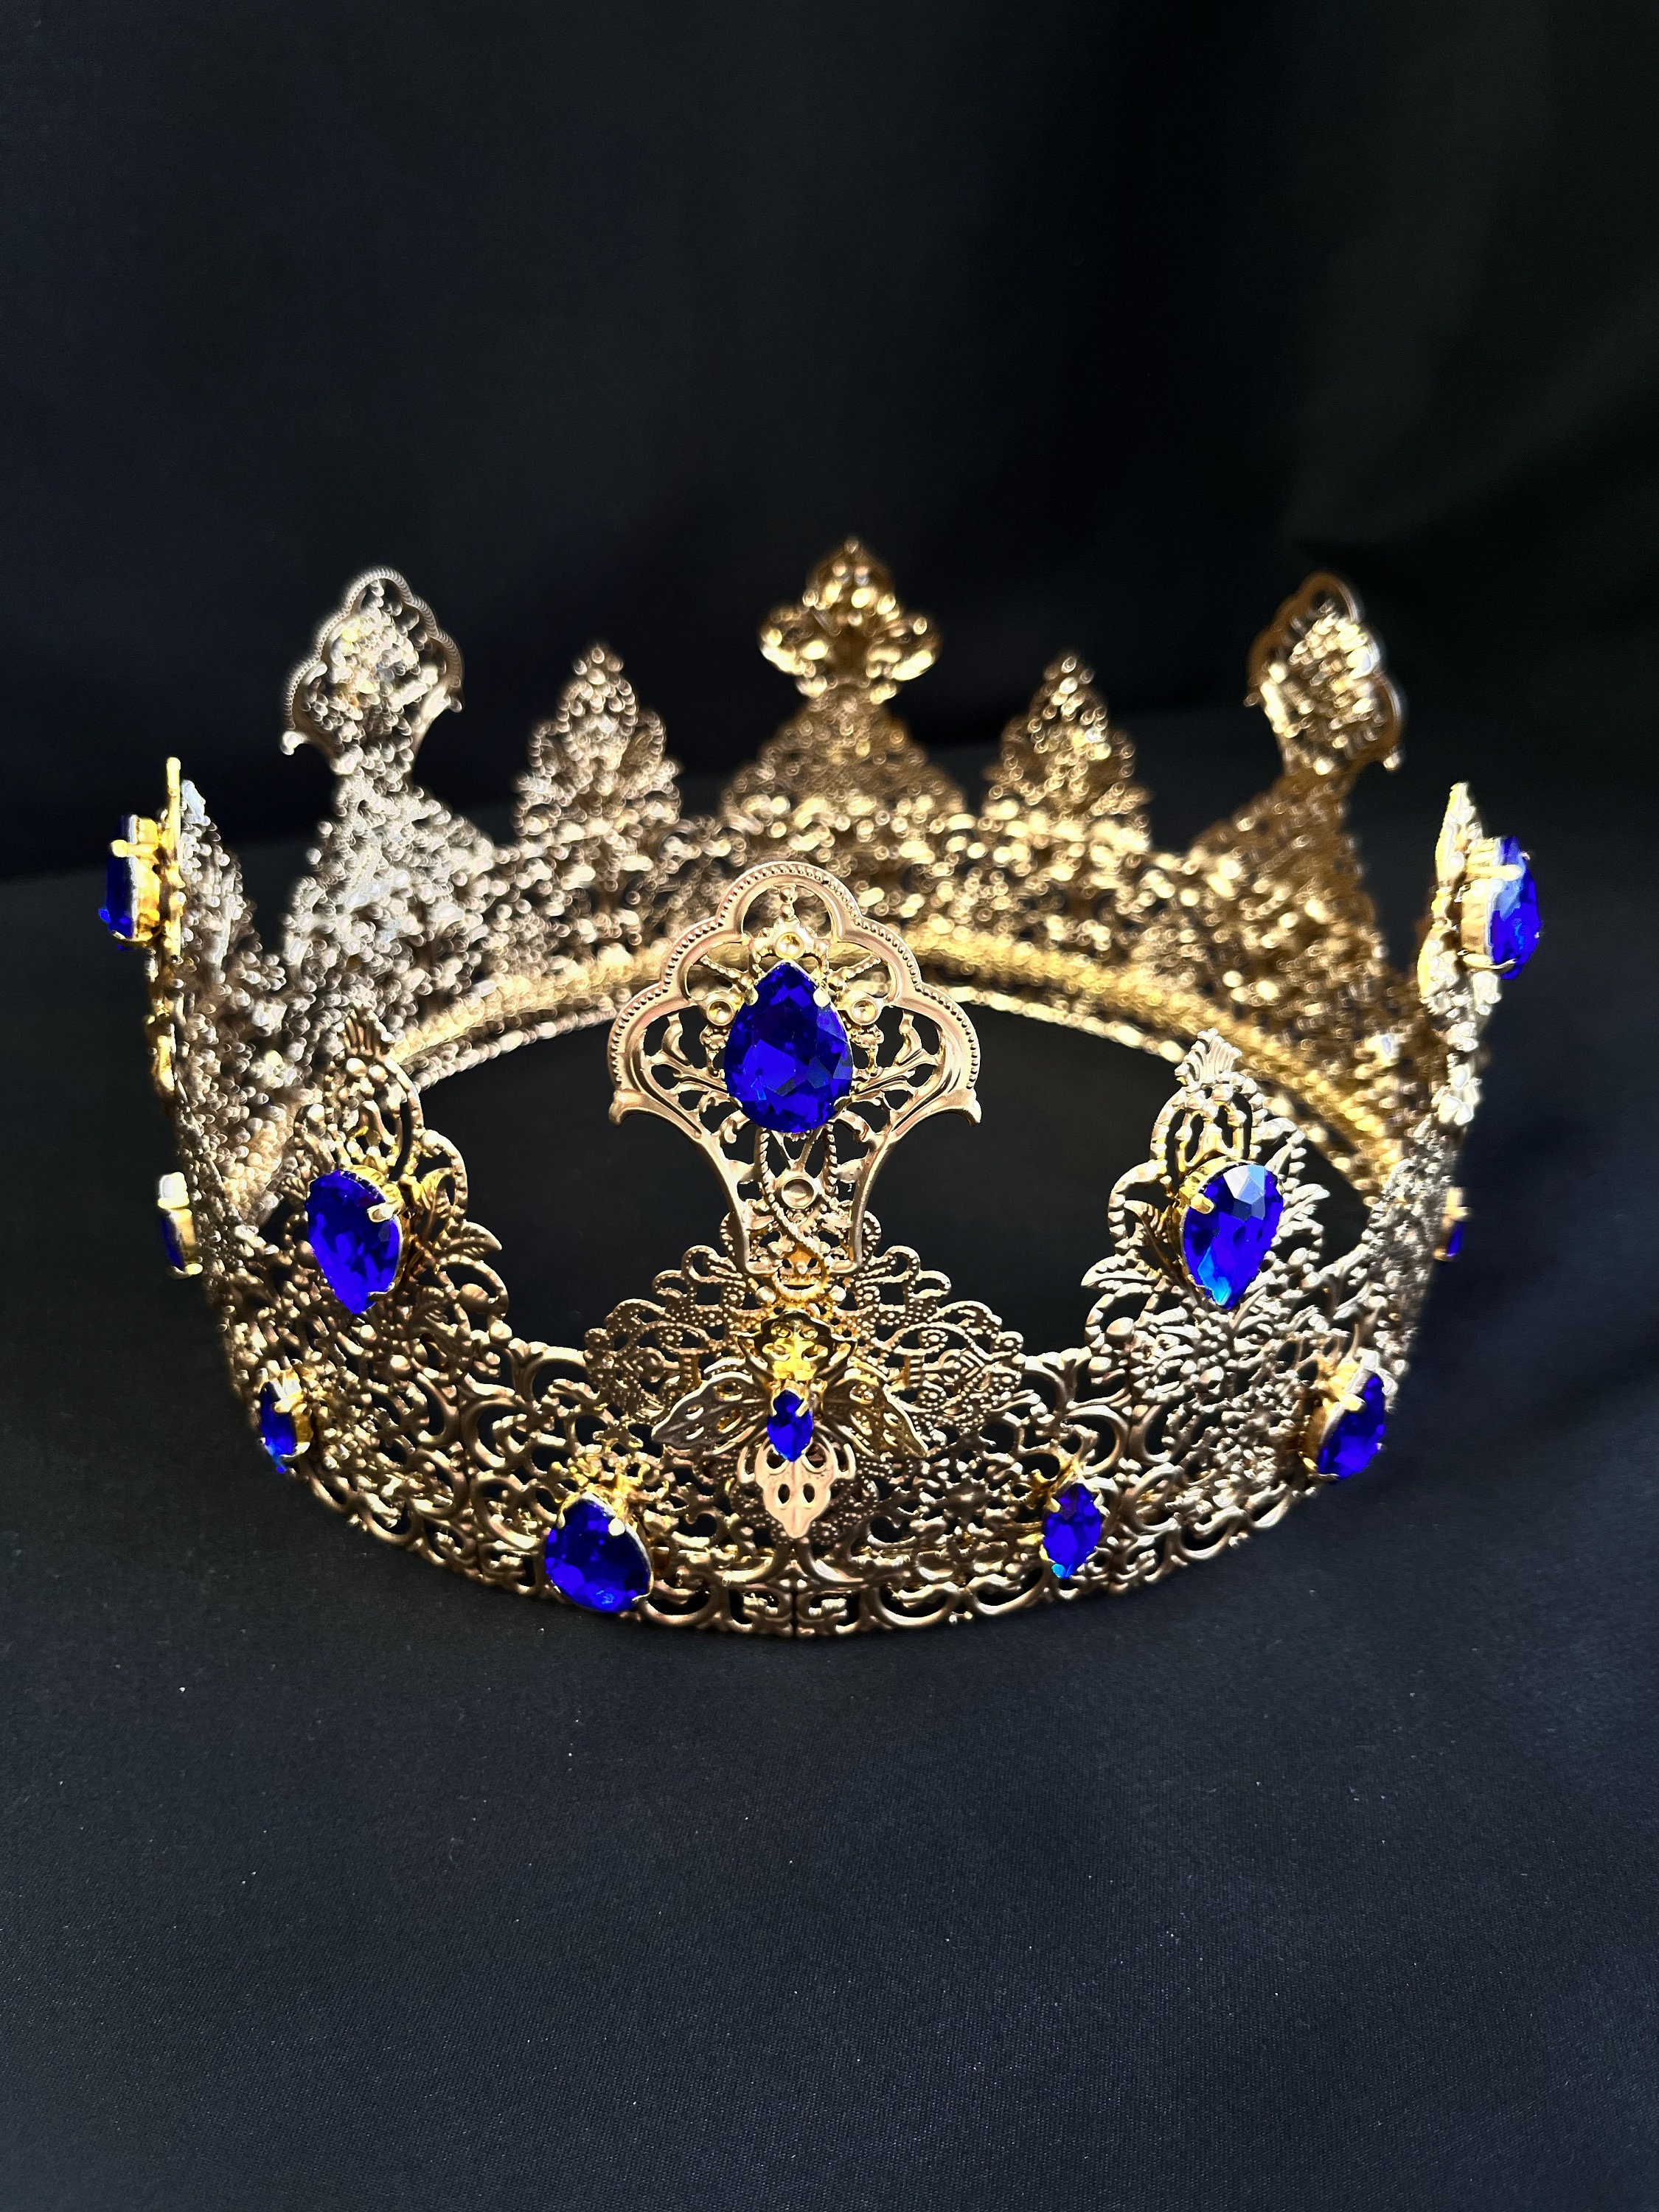 King Crown for Men Royal Blue Crown Queen Medieval Crown